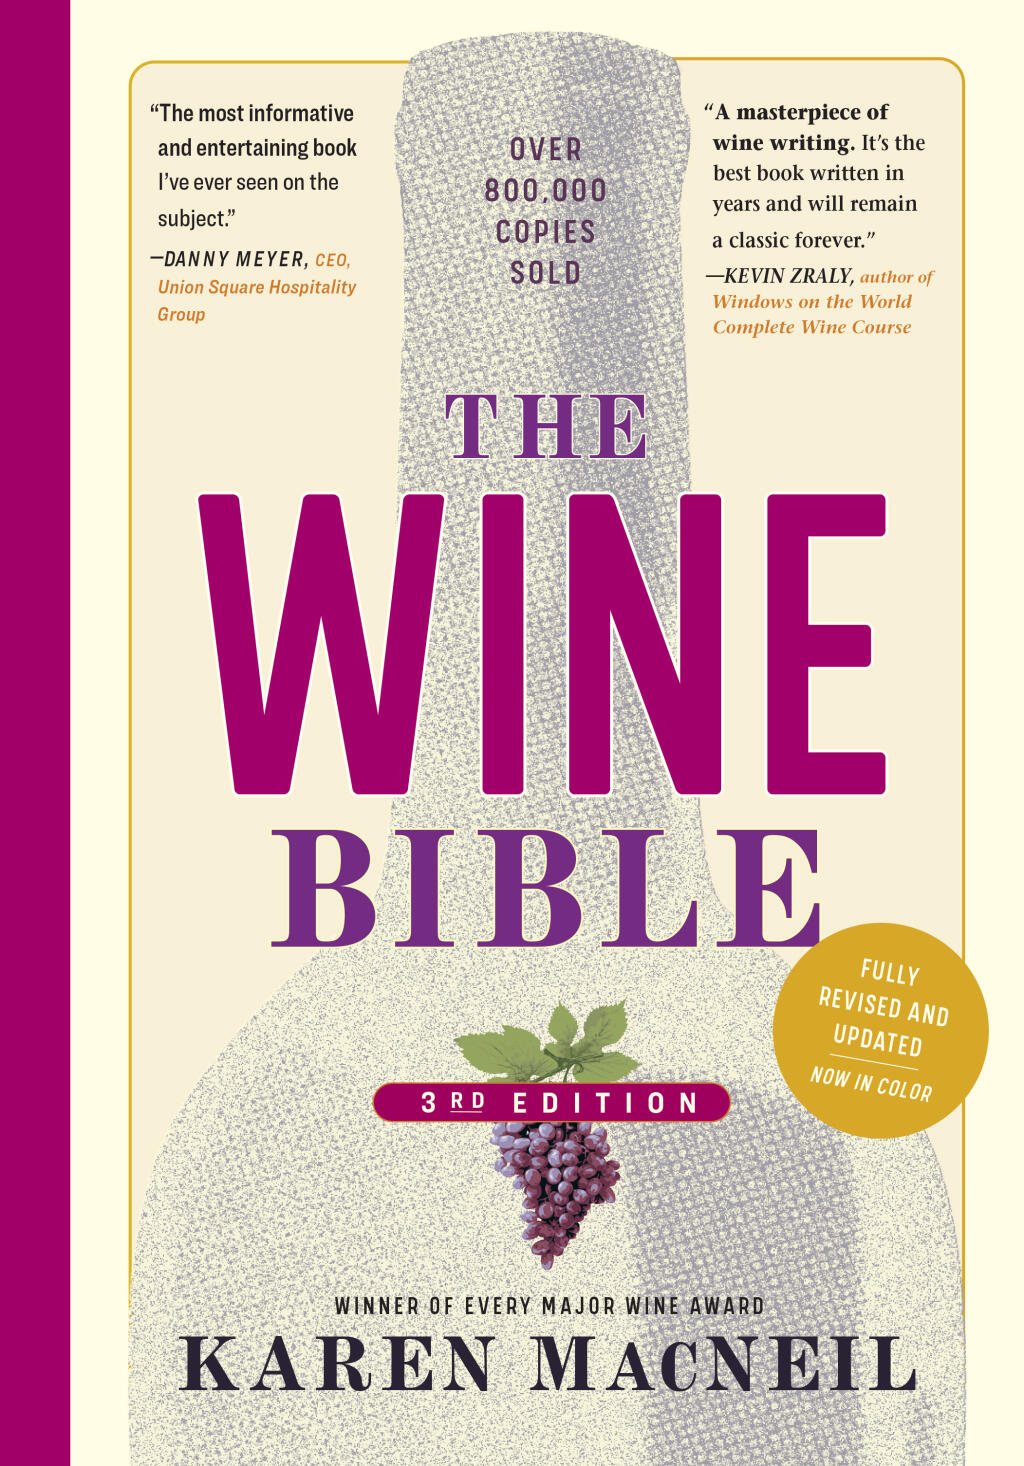 The Wine Bible, 3rd Edition, by Karen MacNeil (Workman Publishing, 2022, $39.99)